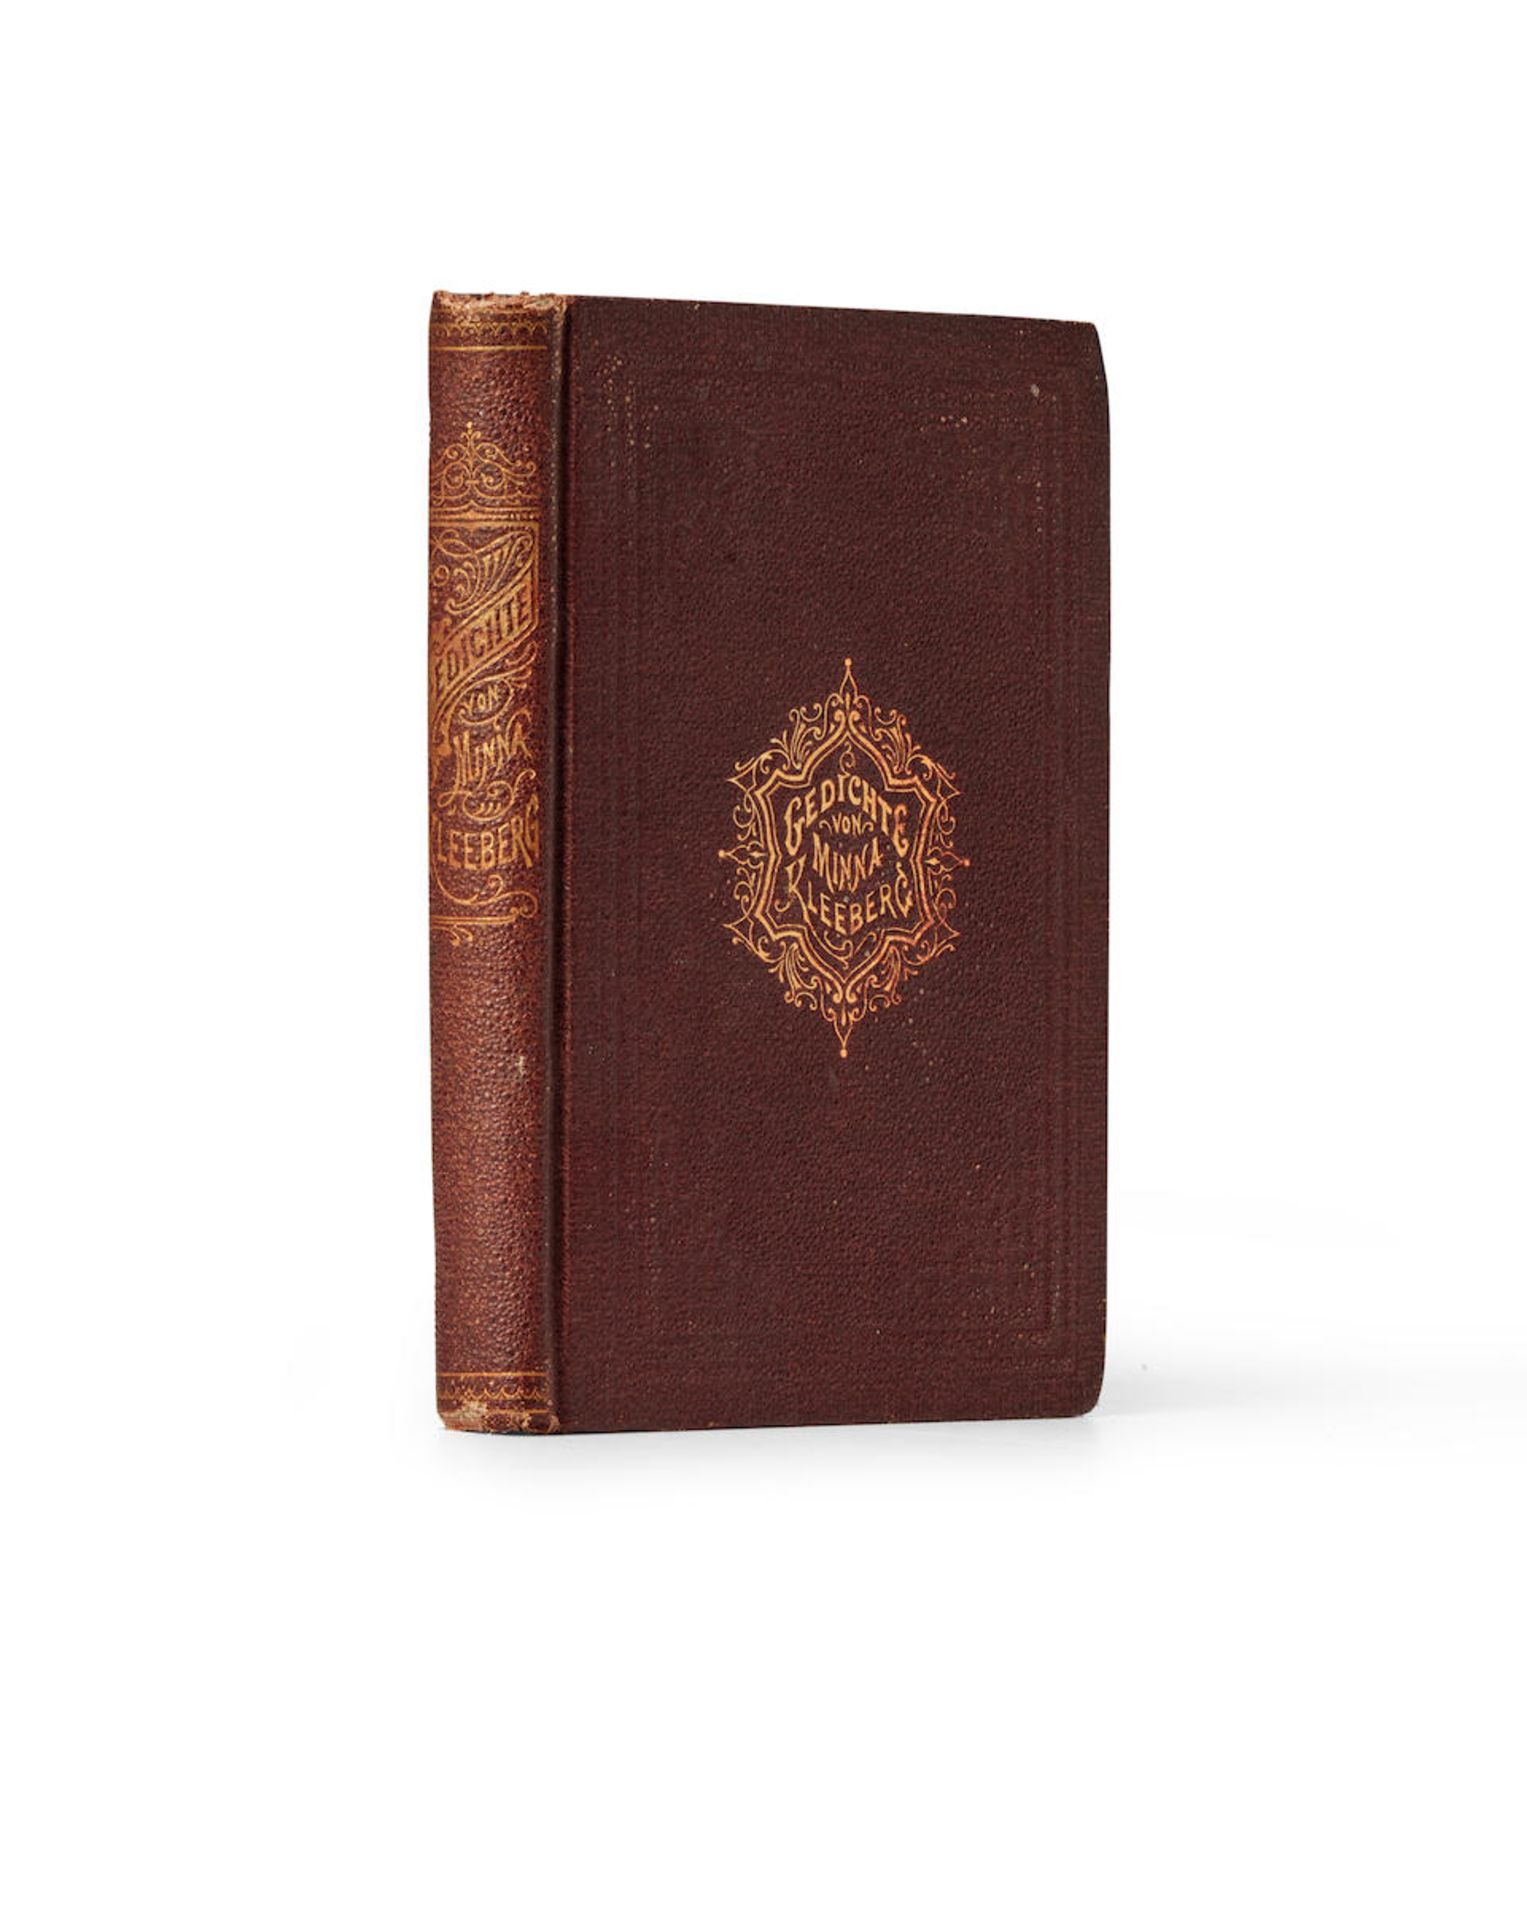 KLEEBERG, MINNA. 1841-1878. Gedichte. Louisville: Henry Knöfel; New-York: Willmer u. Rogers...